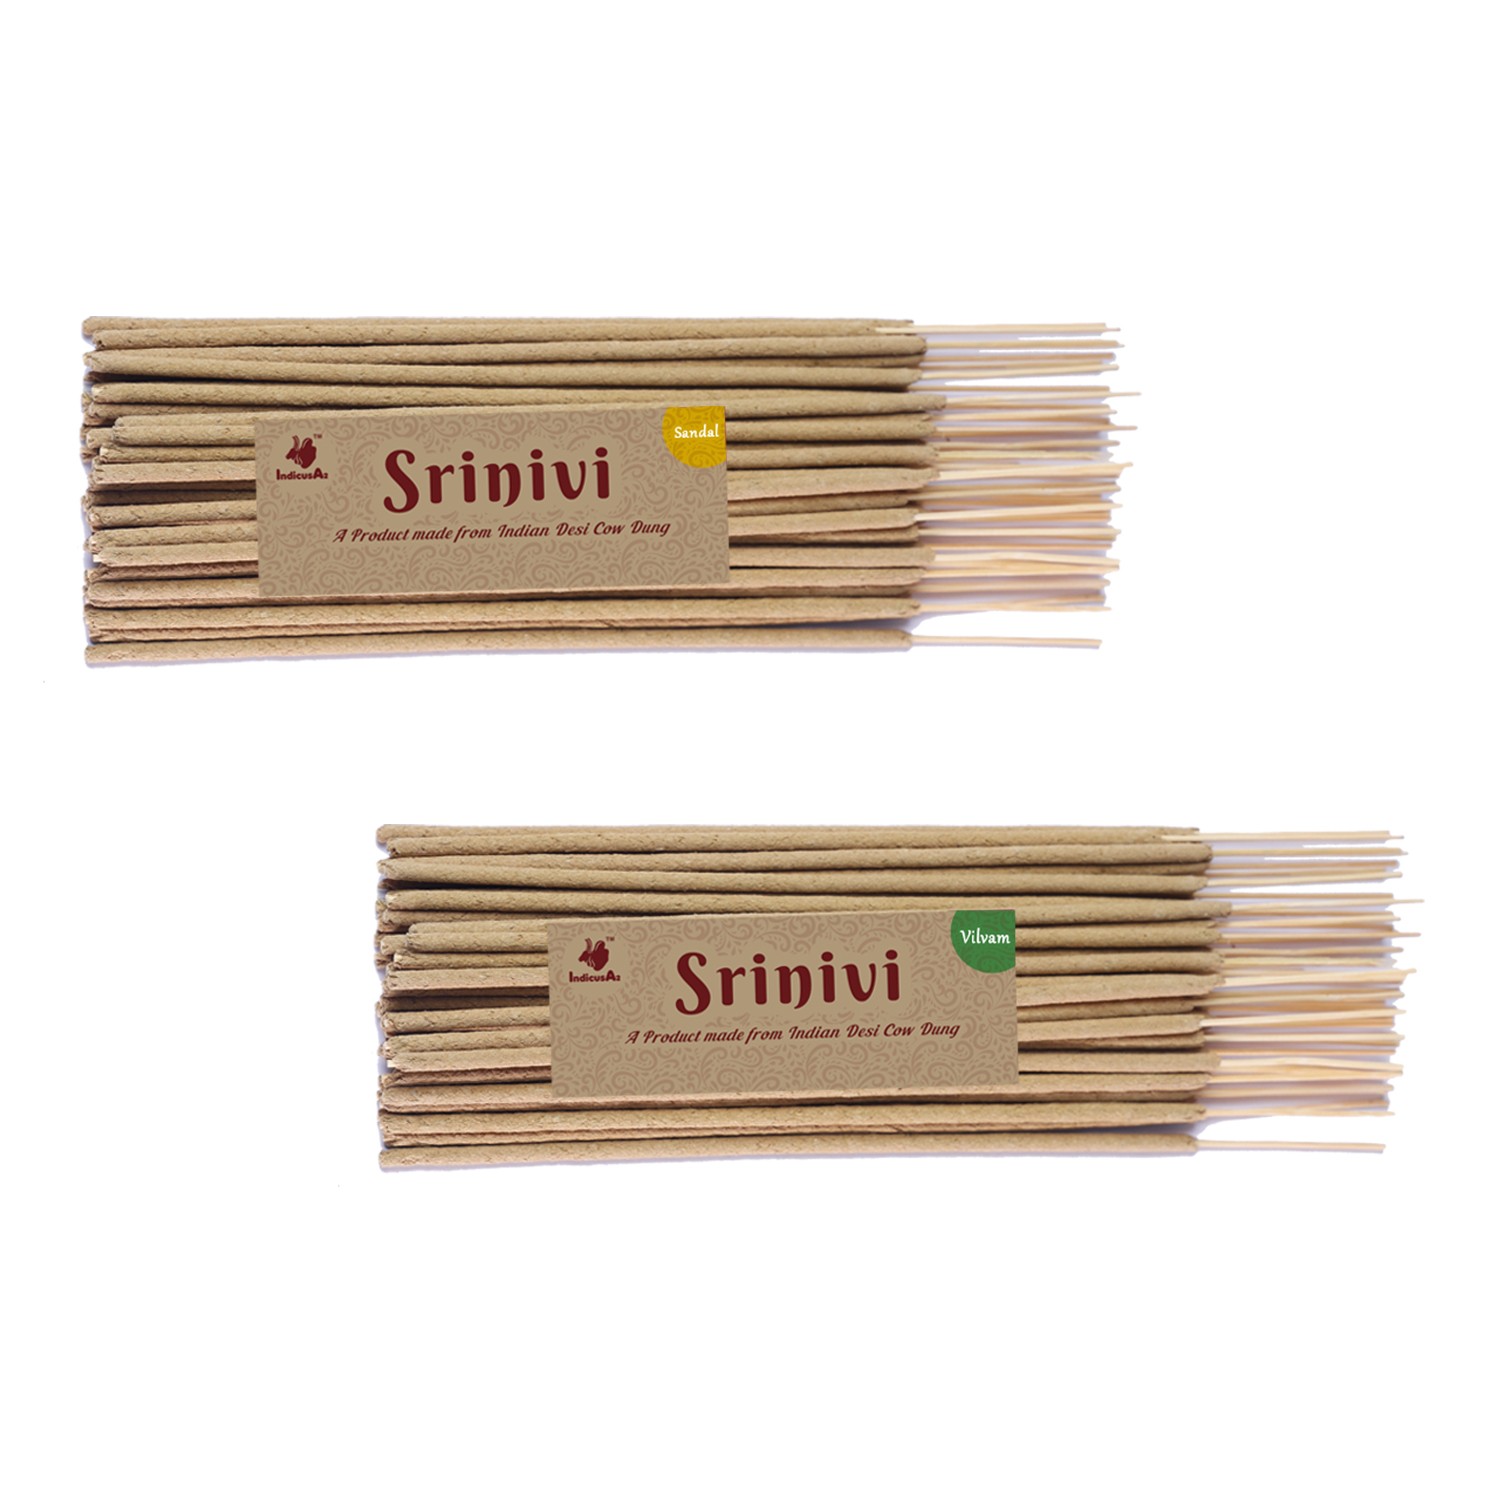 Srinivi Agarbattis - Made up of desi cow dung|Pack of 2|Each pack consists of 35 sticks|Fragrance – Sandal, Vilvam.